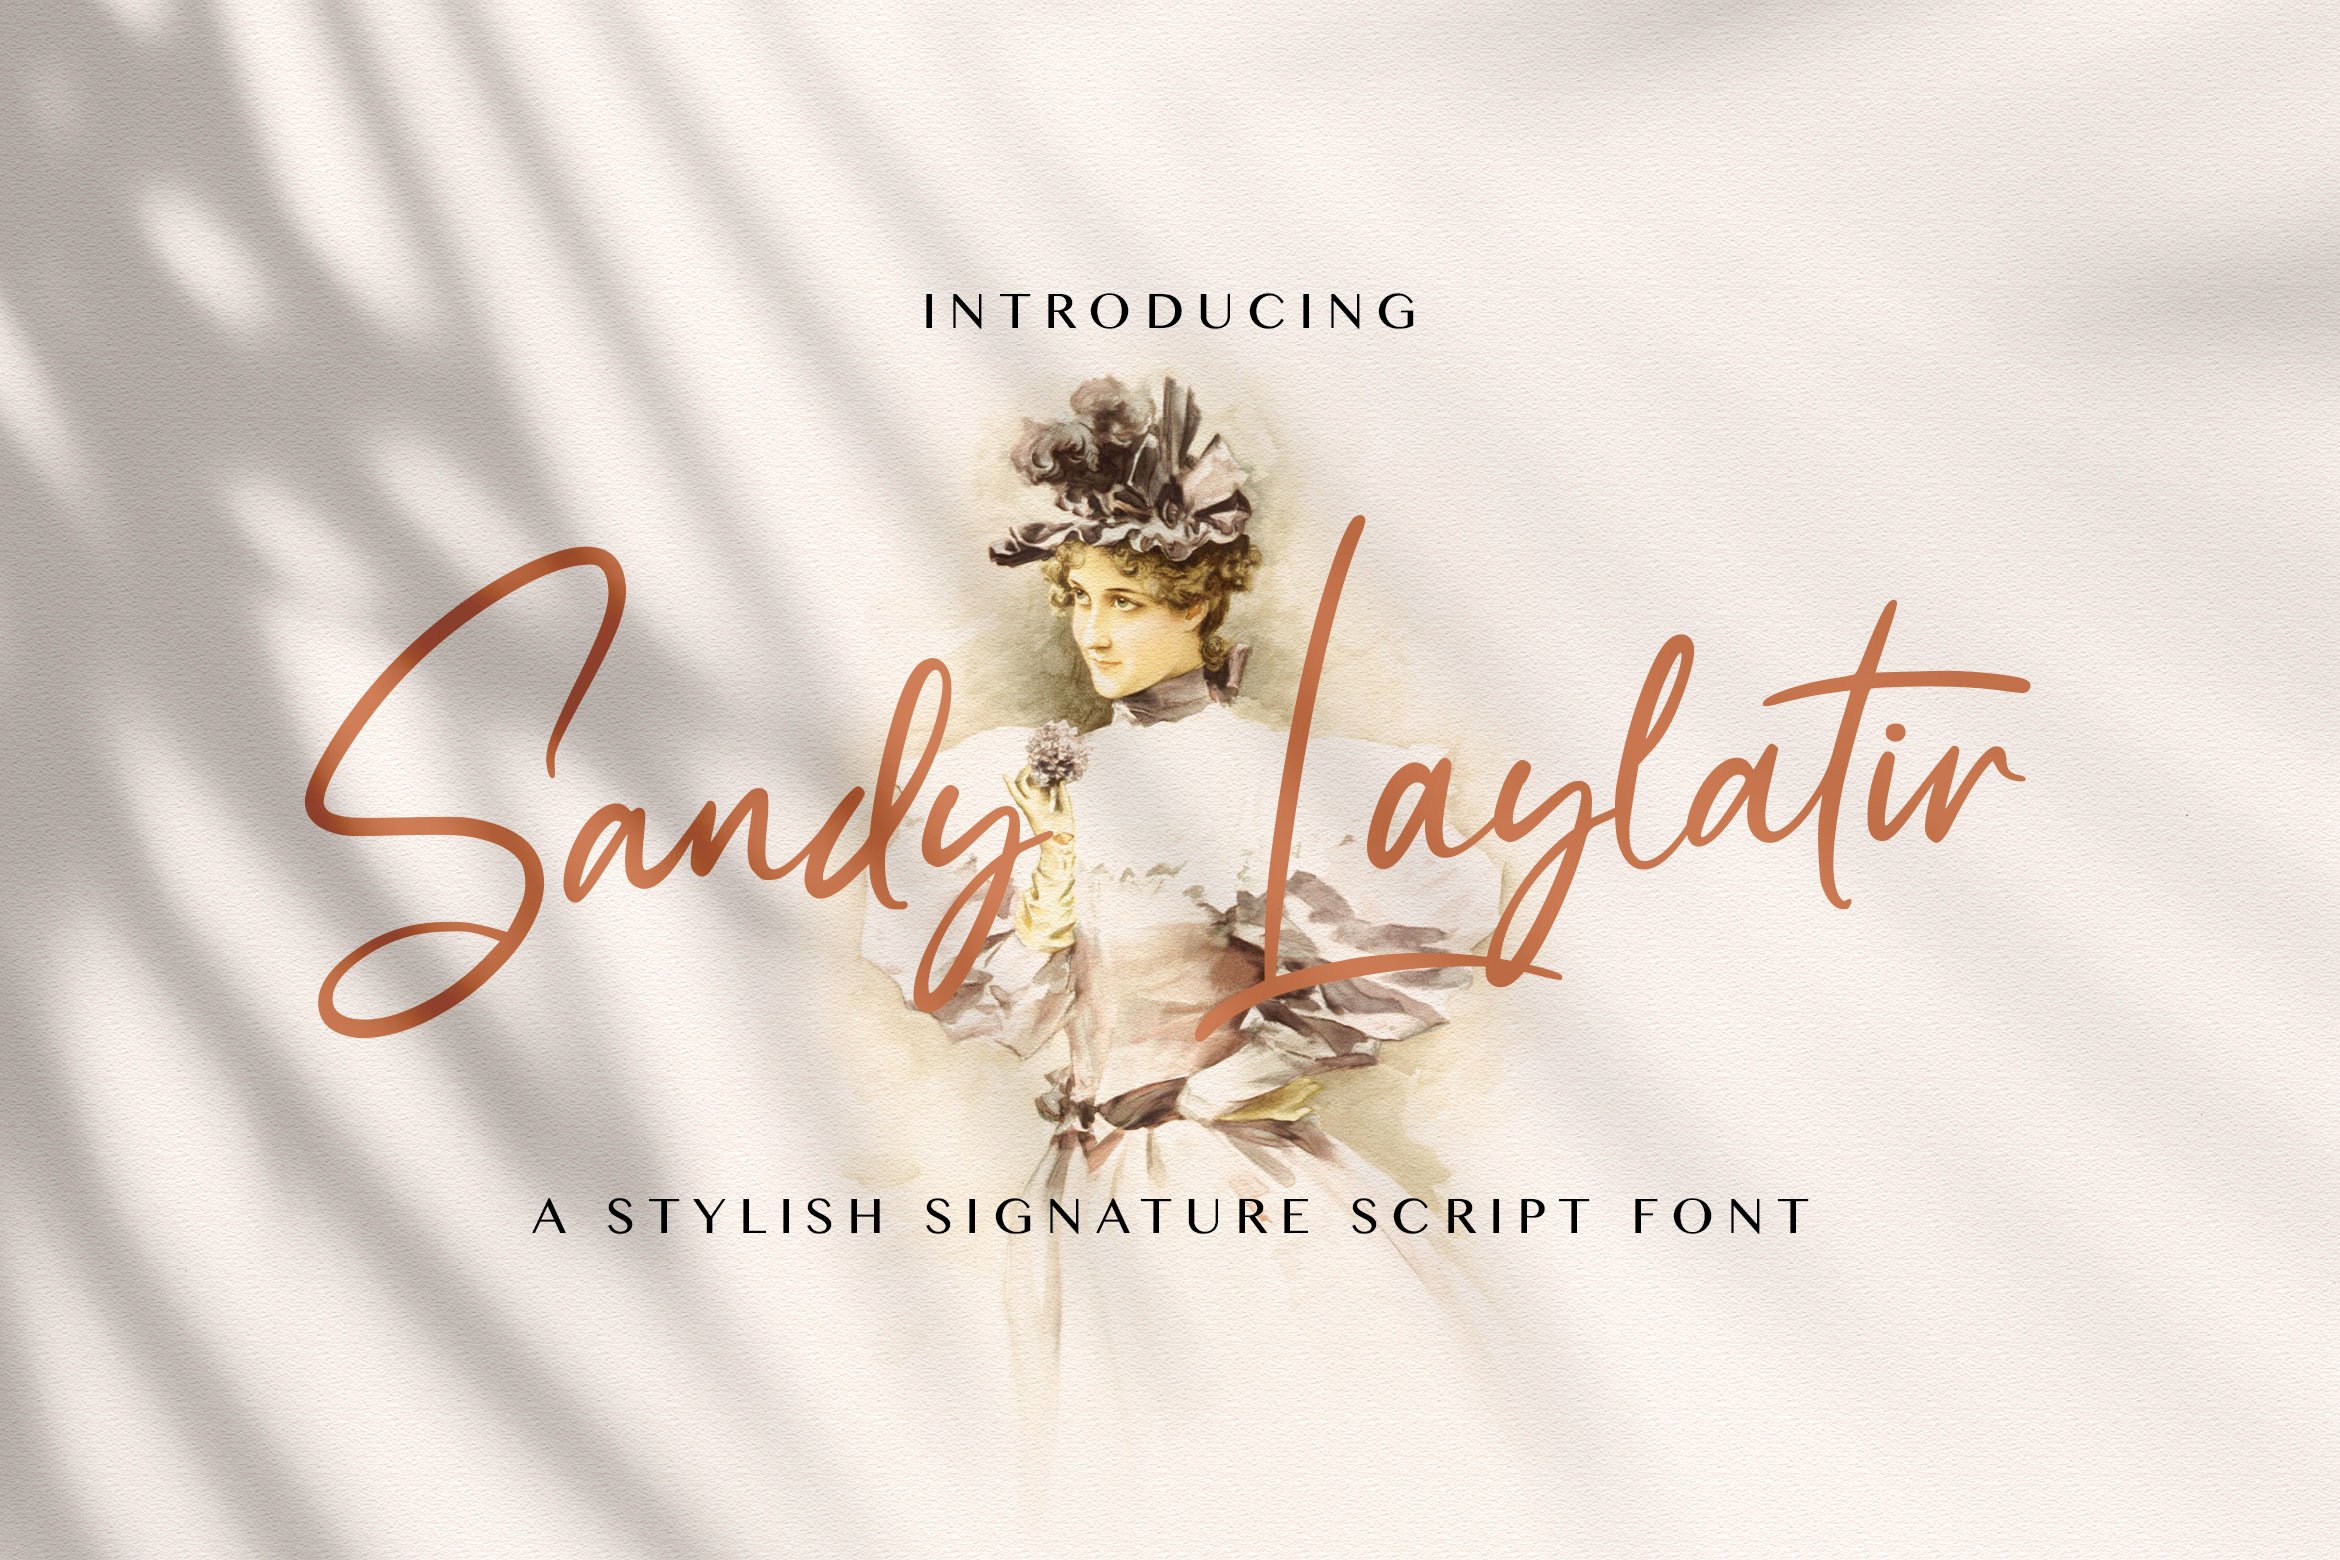 Sandy Lailyatir - Handwritten Font cover image.